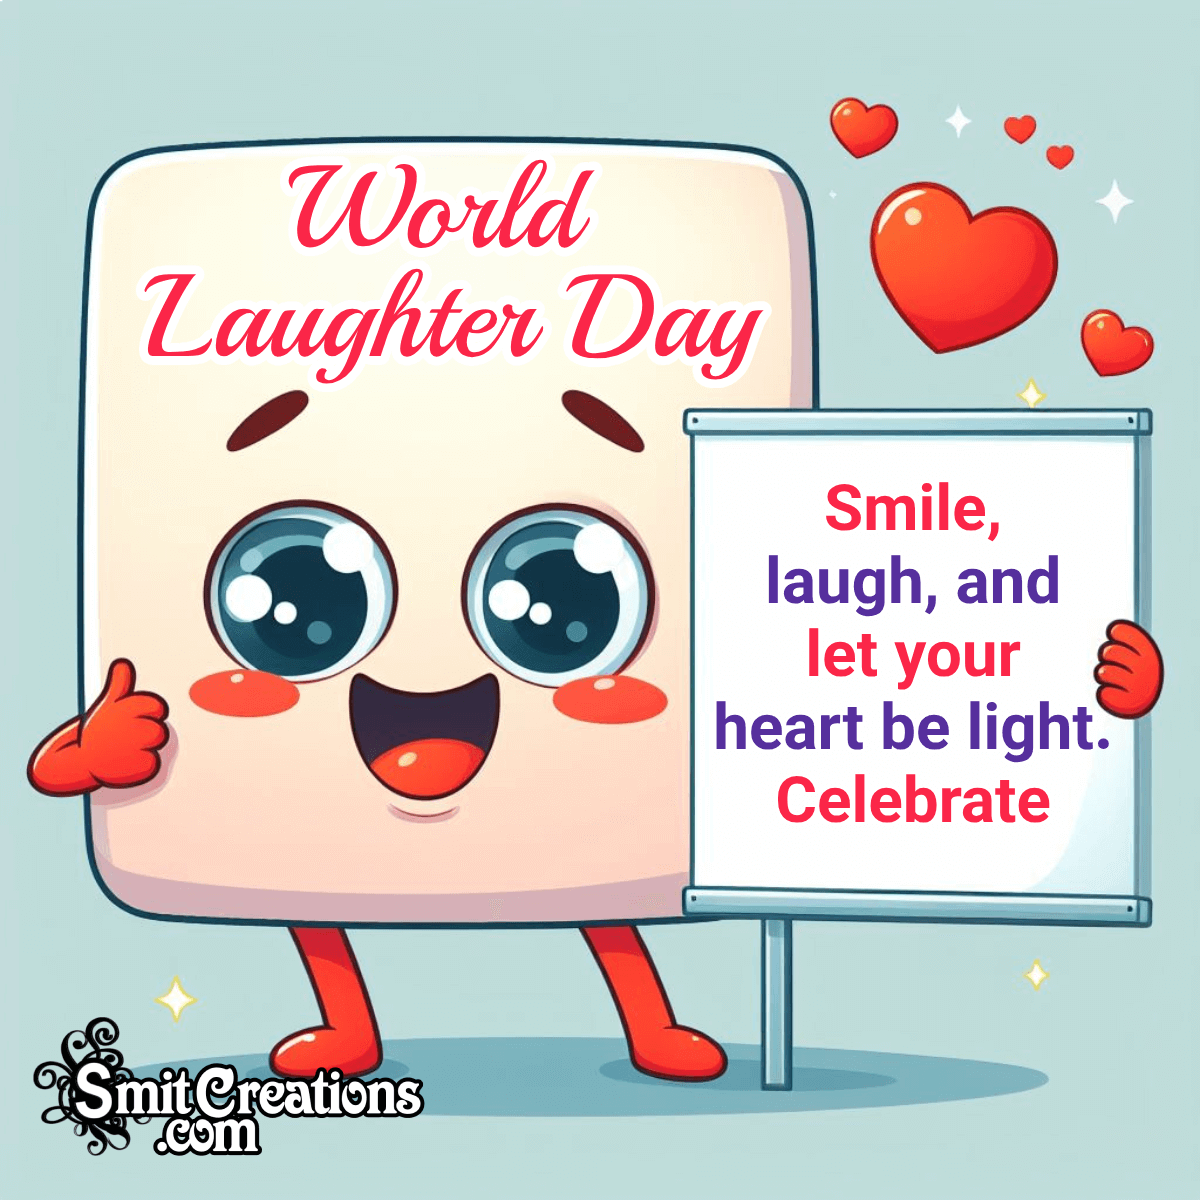 Wonderful World Laughter Day Greeting Image